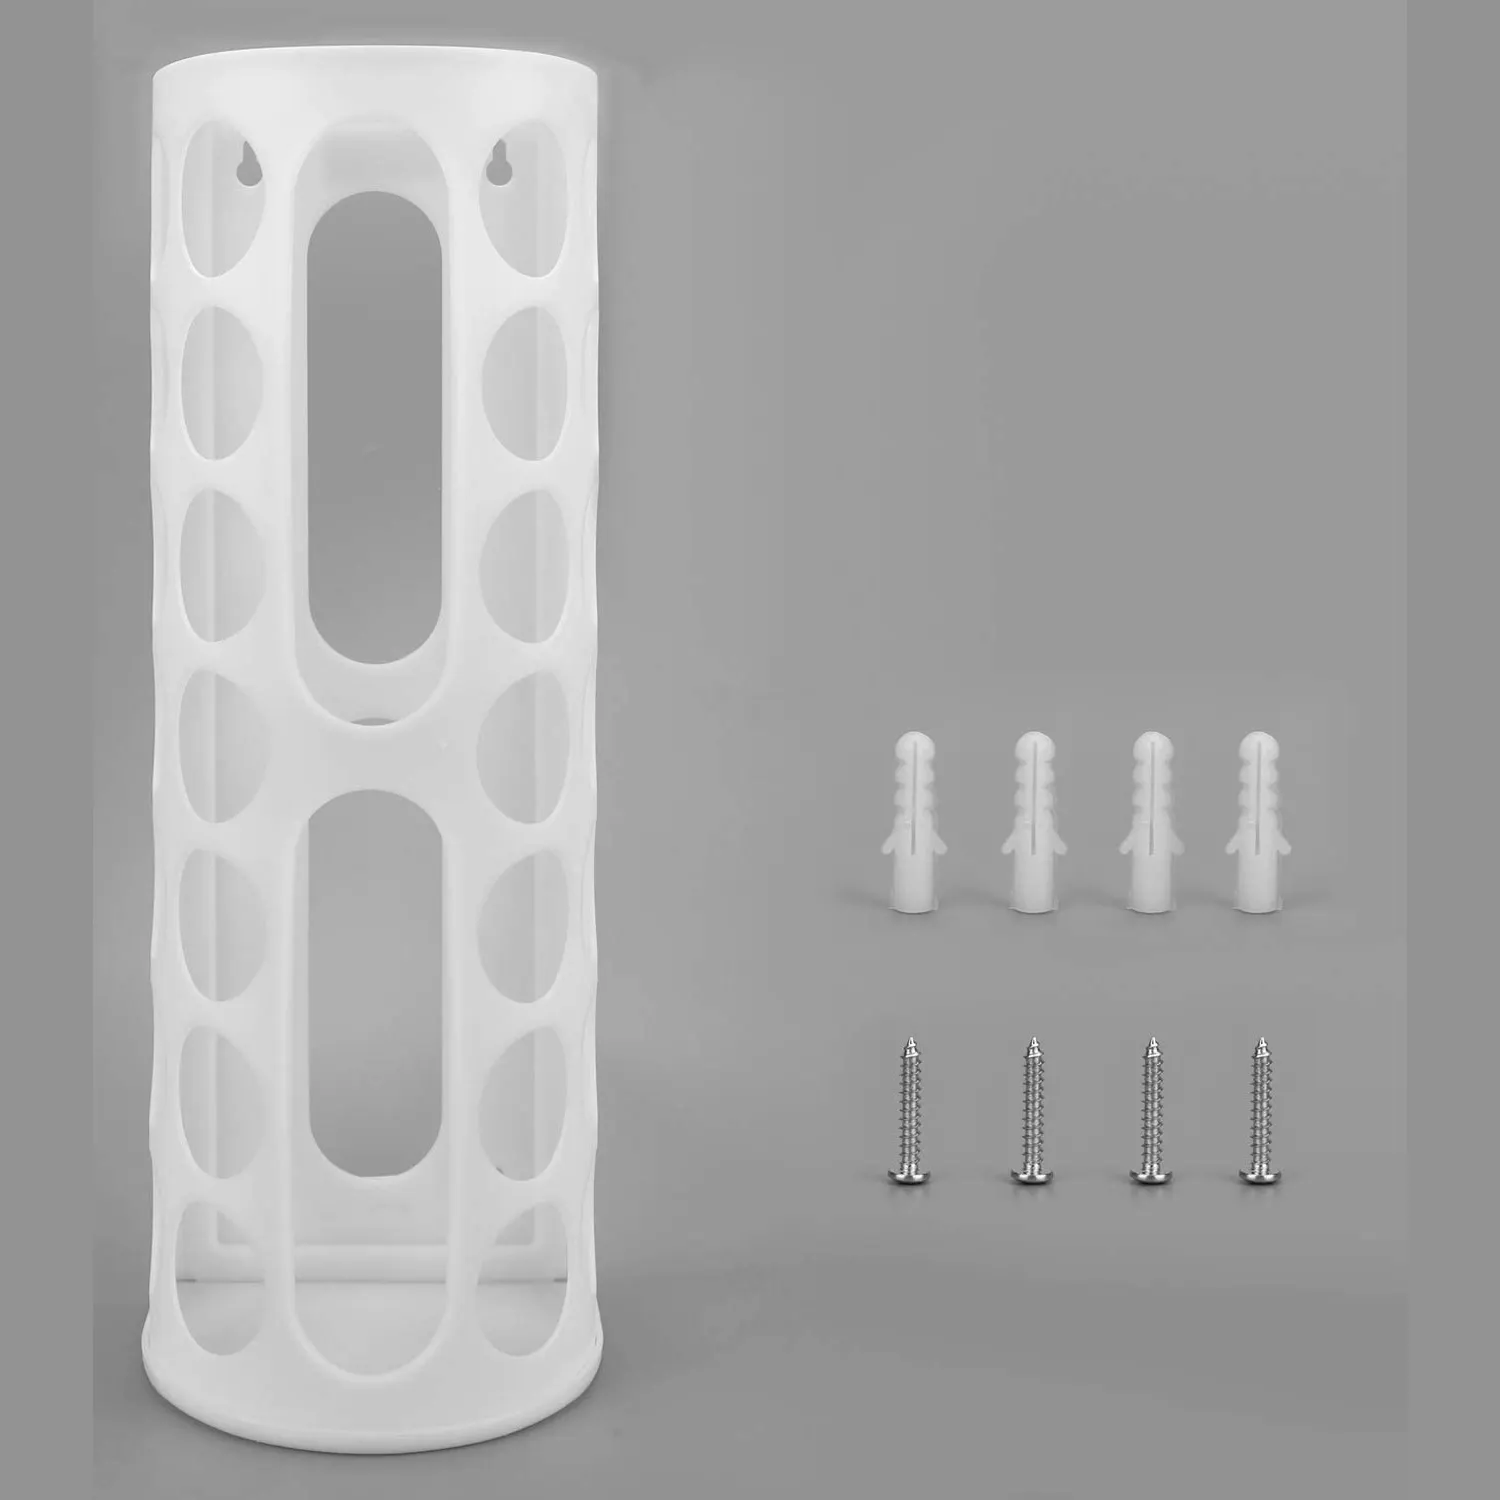 Suporte de vinil para rack de plástico vertical 42001, tubo de papel para armazenamento, suporte de parede para rolos de vinil, suporte de 14 furos